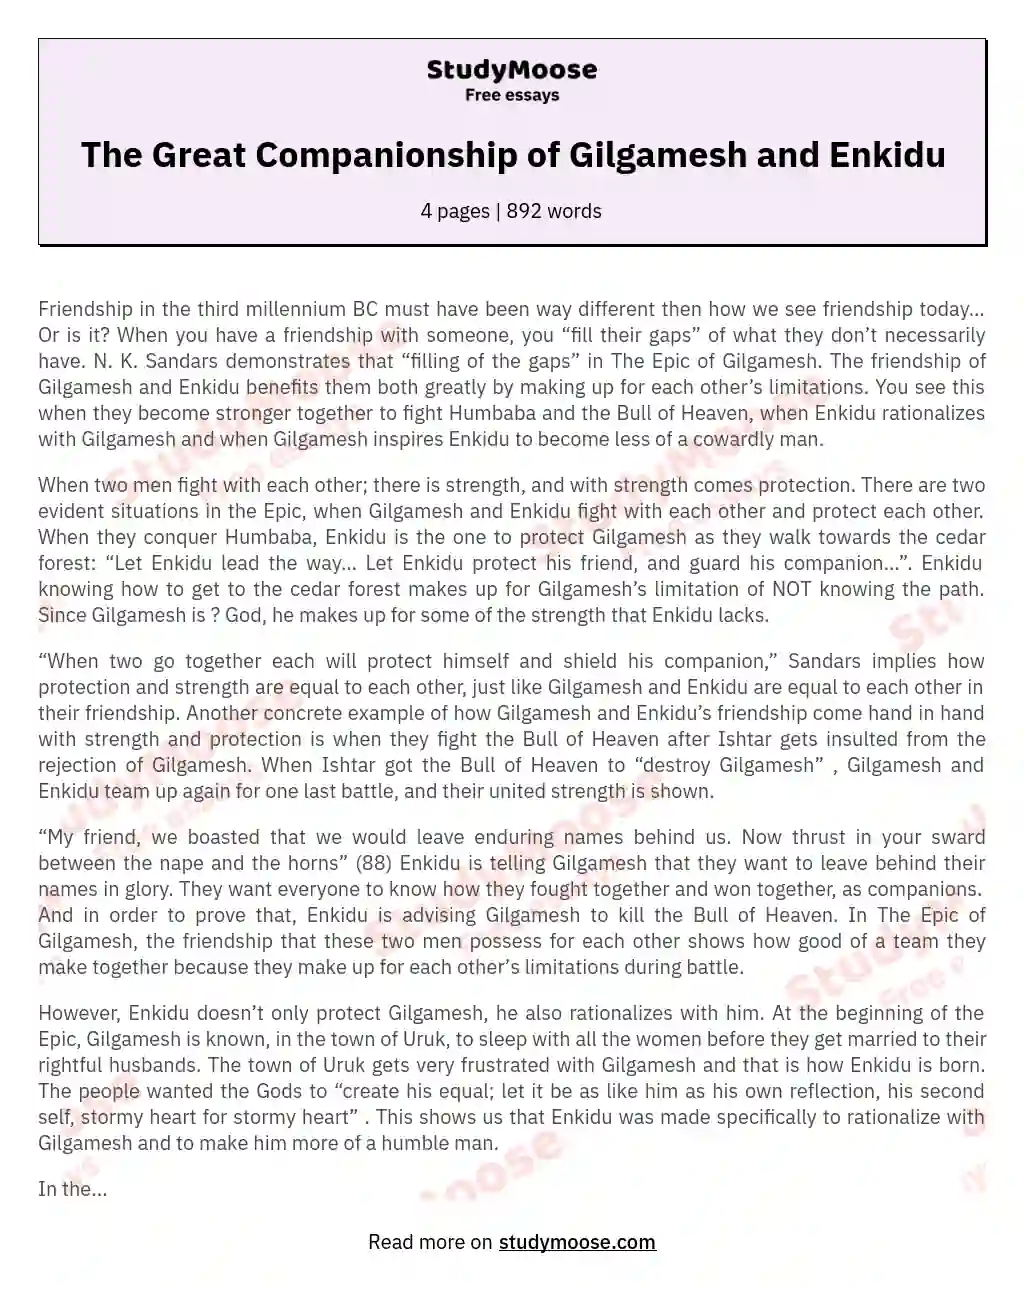 gilgamesh and enkidu friendship essay